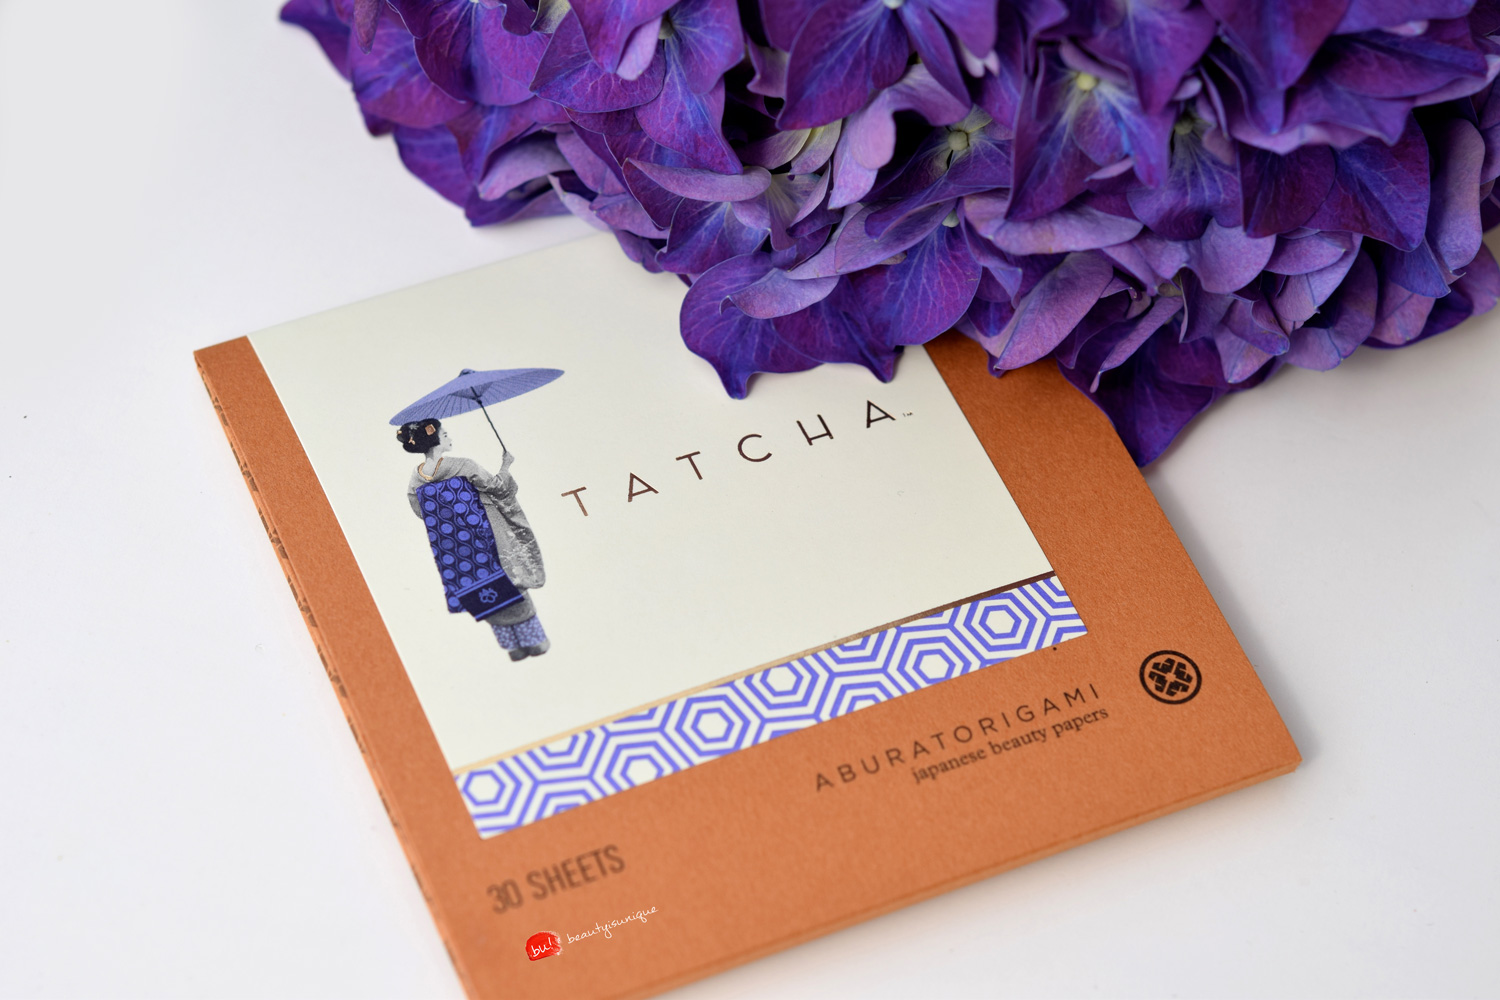 tatcha-aburatorigami-japanese-beauty-papers